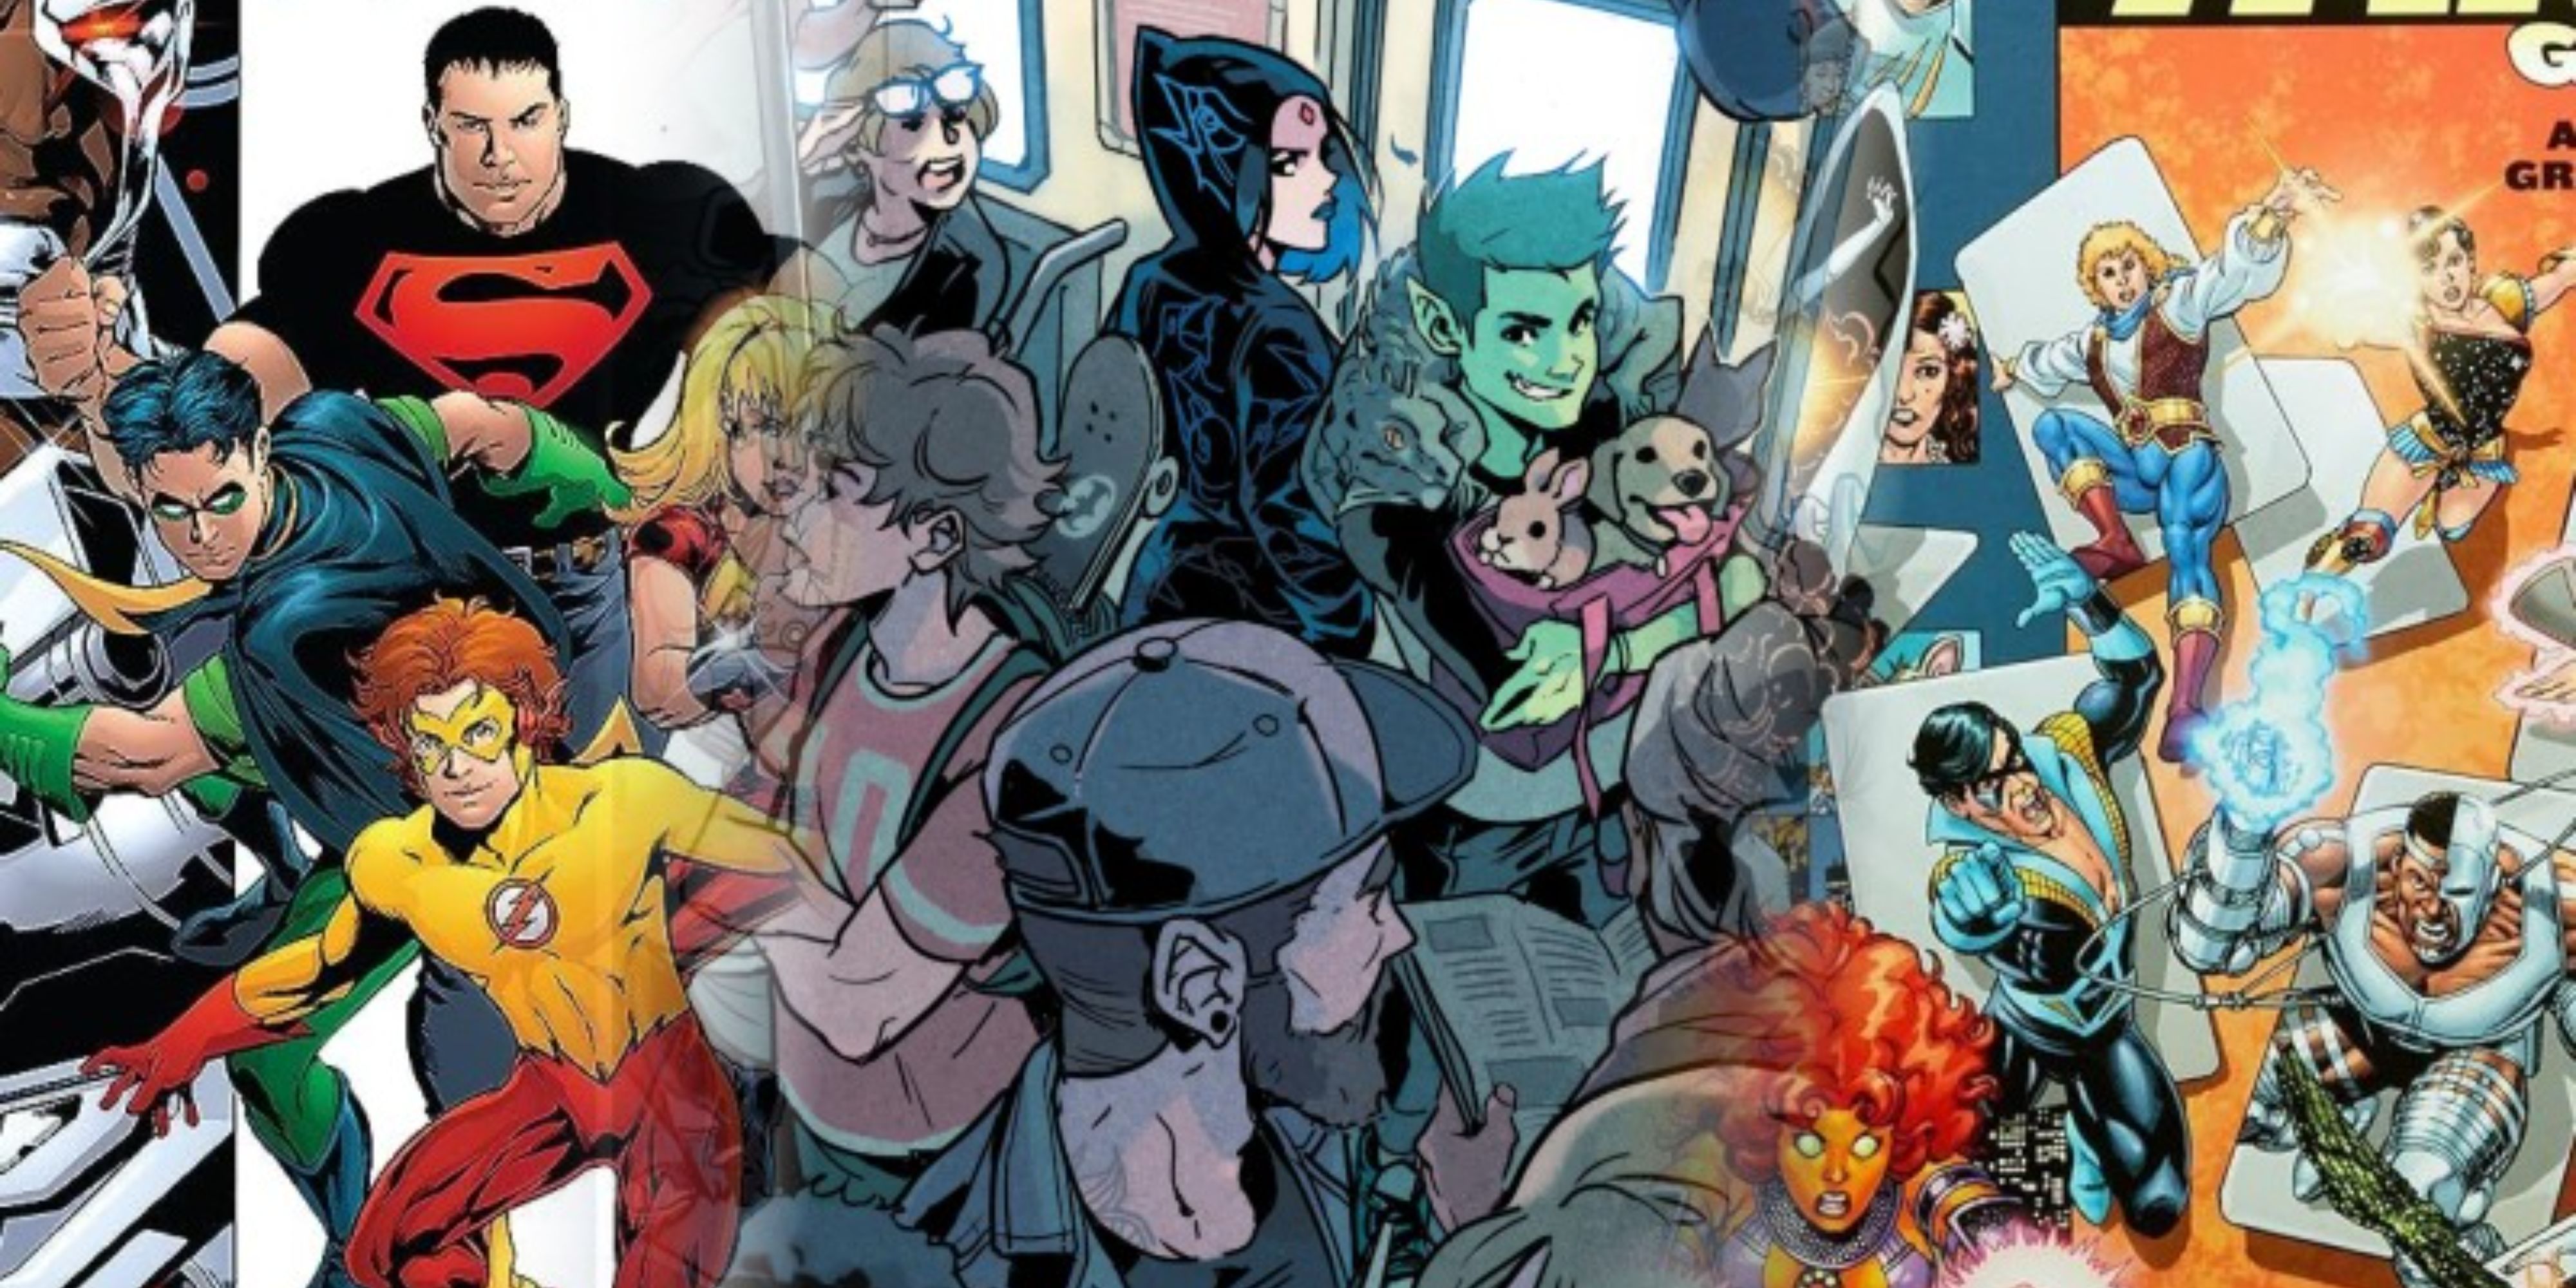 Images of the Teen Titans YA novels, Geoff Johns' Teen Titans and New Teen Titans: Games.